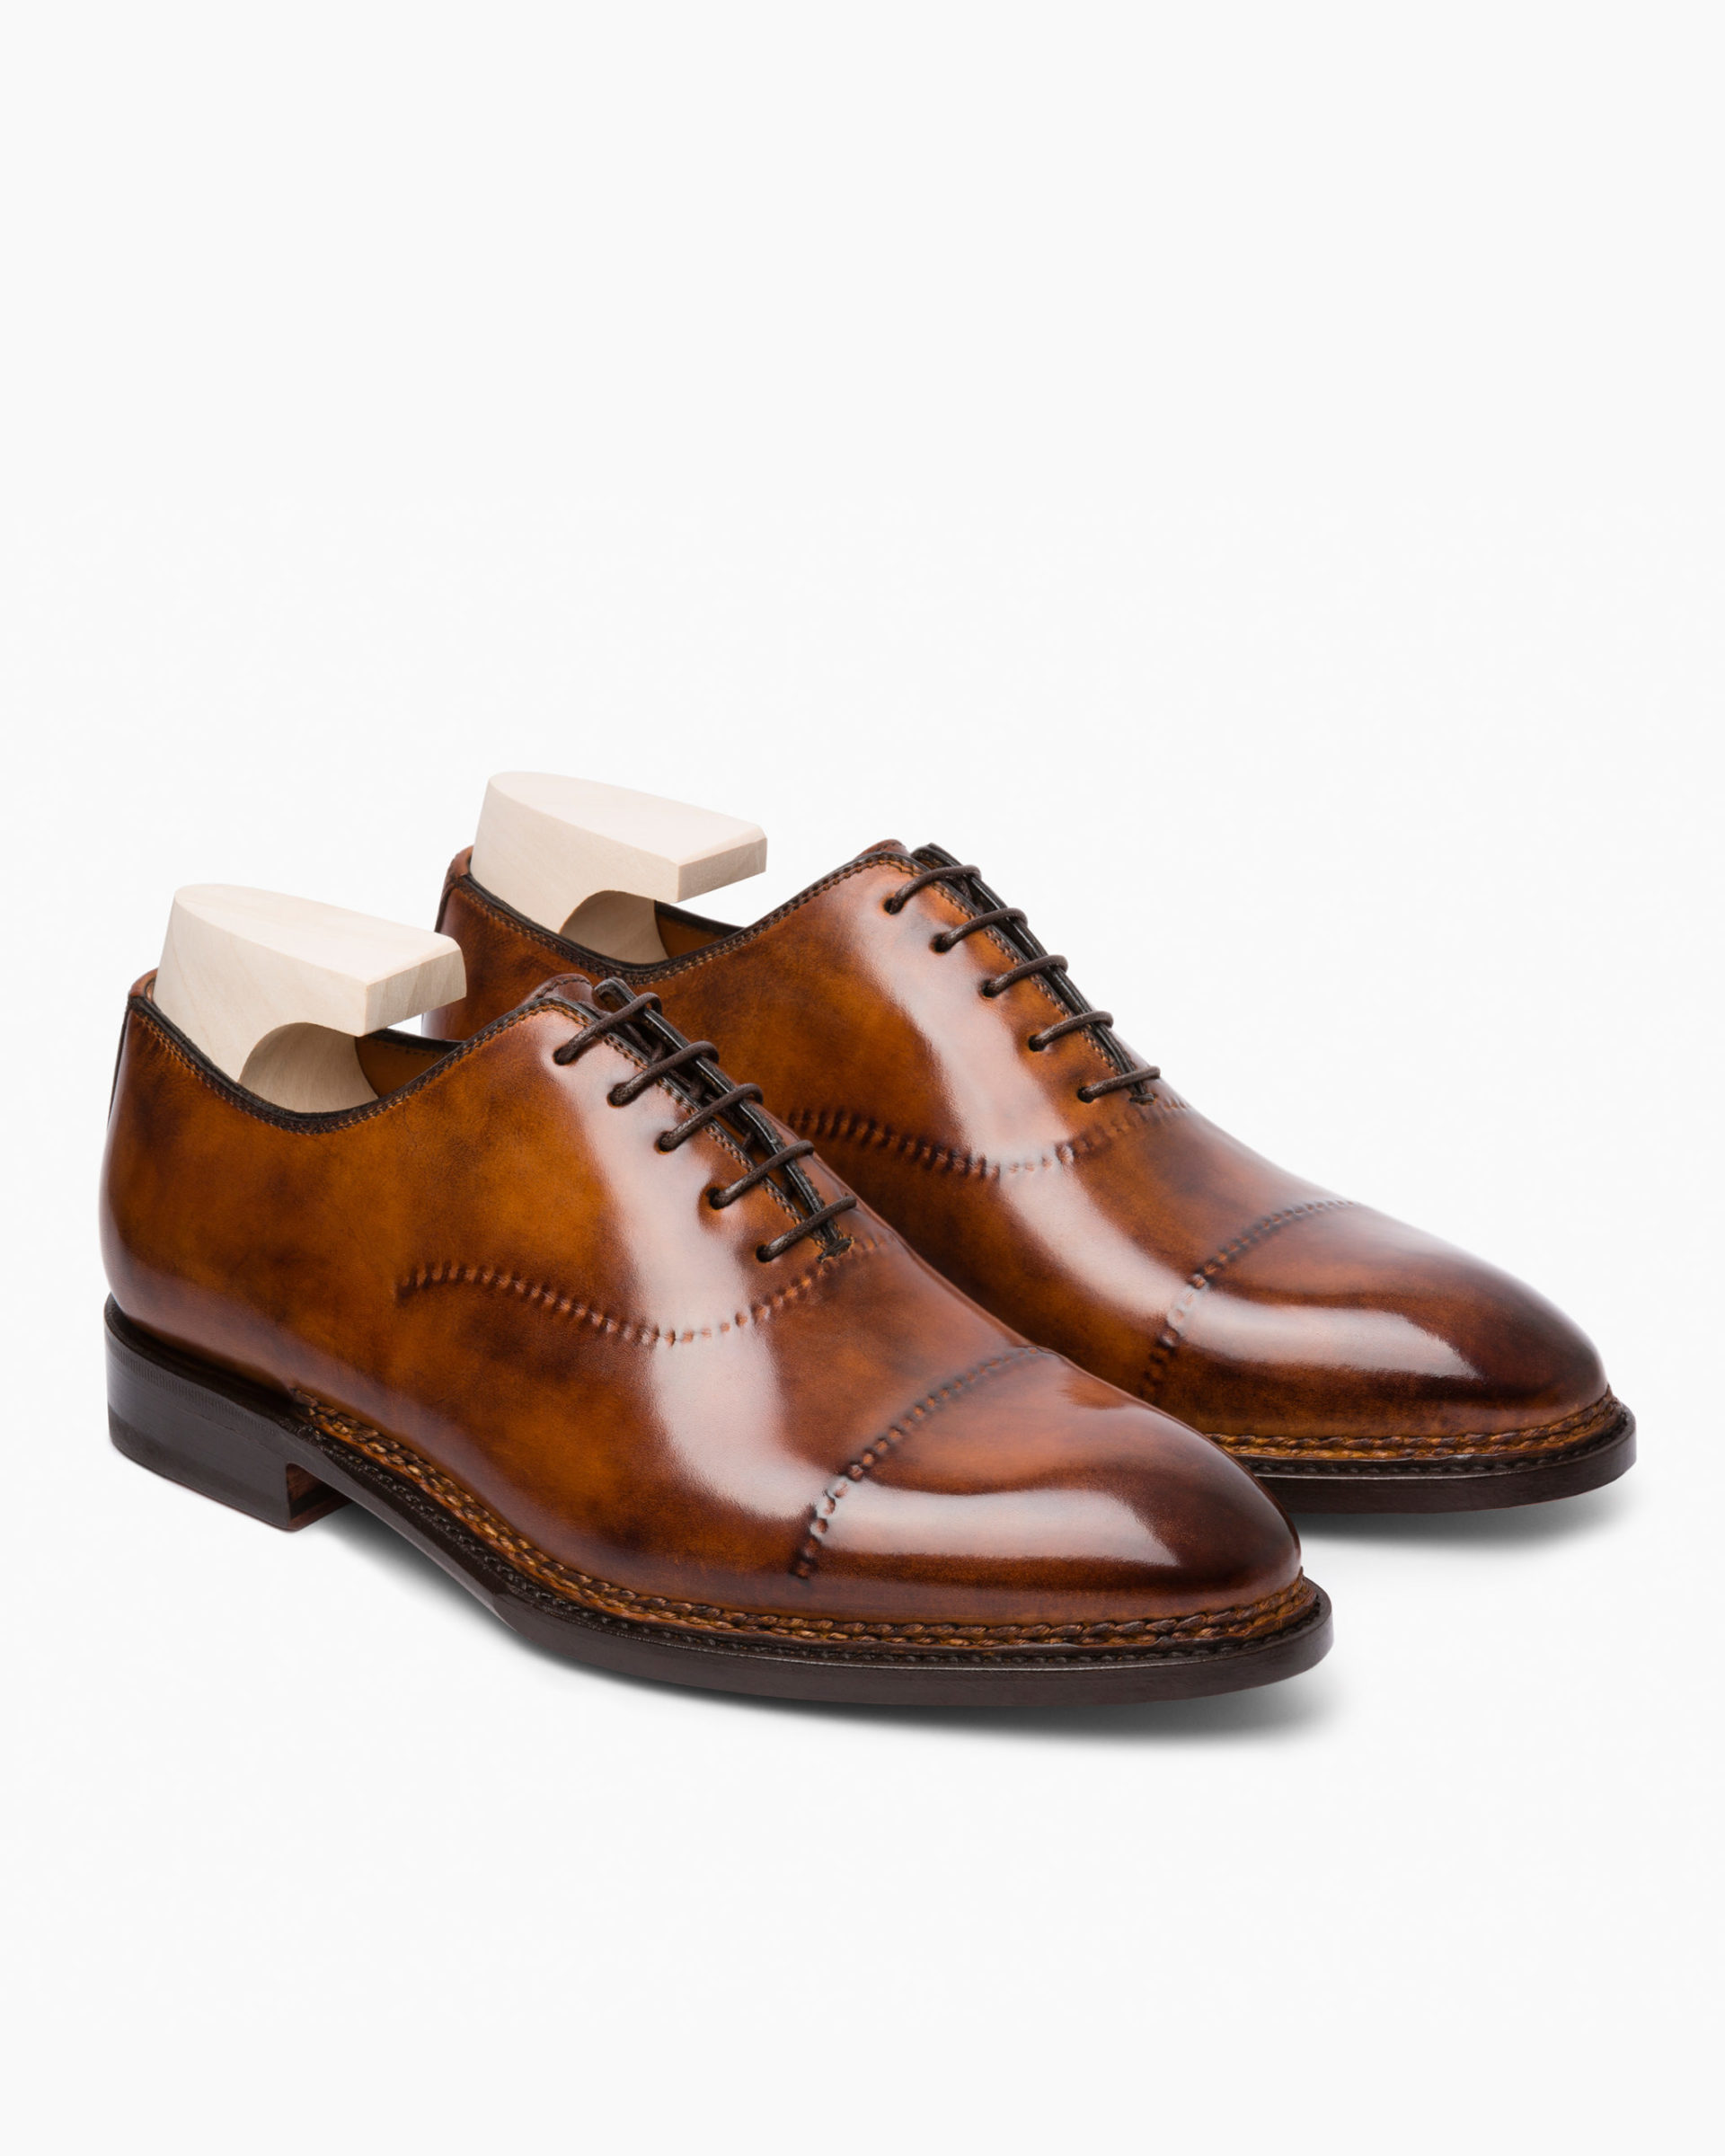 Vittorio - Bontoni: Handcrafted Italian Men's Shoes